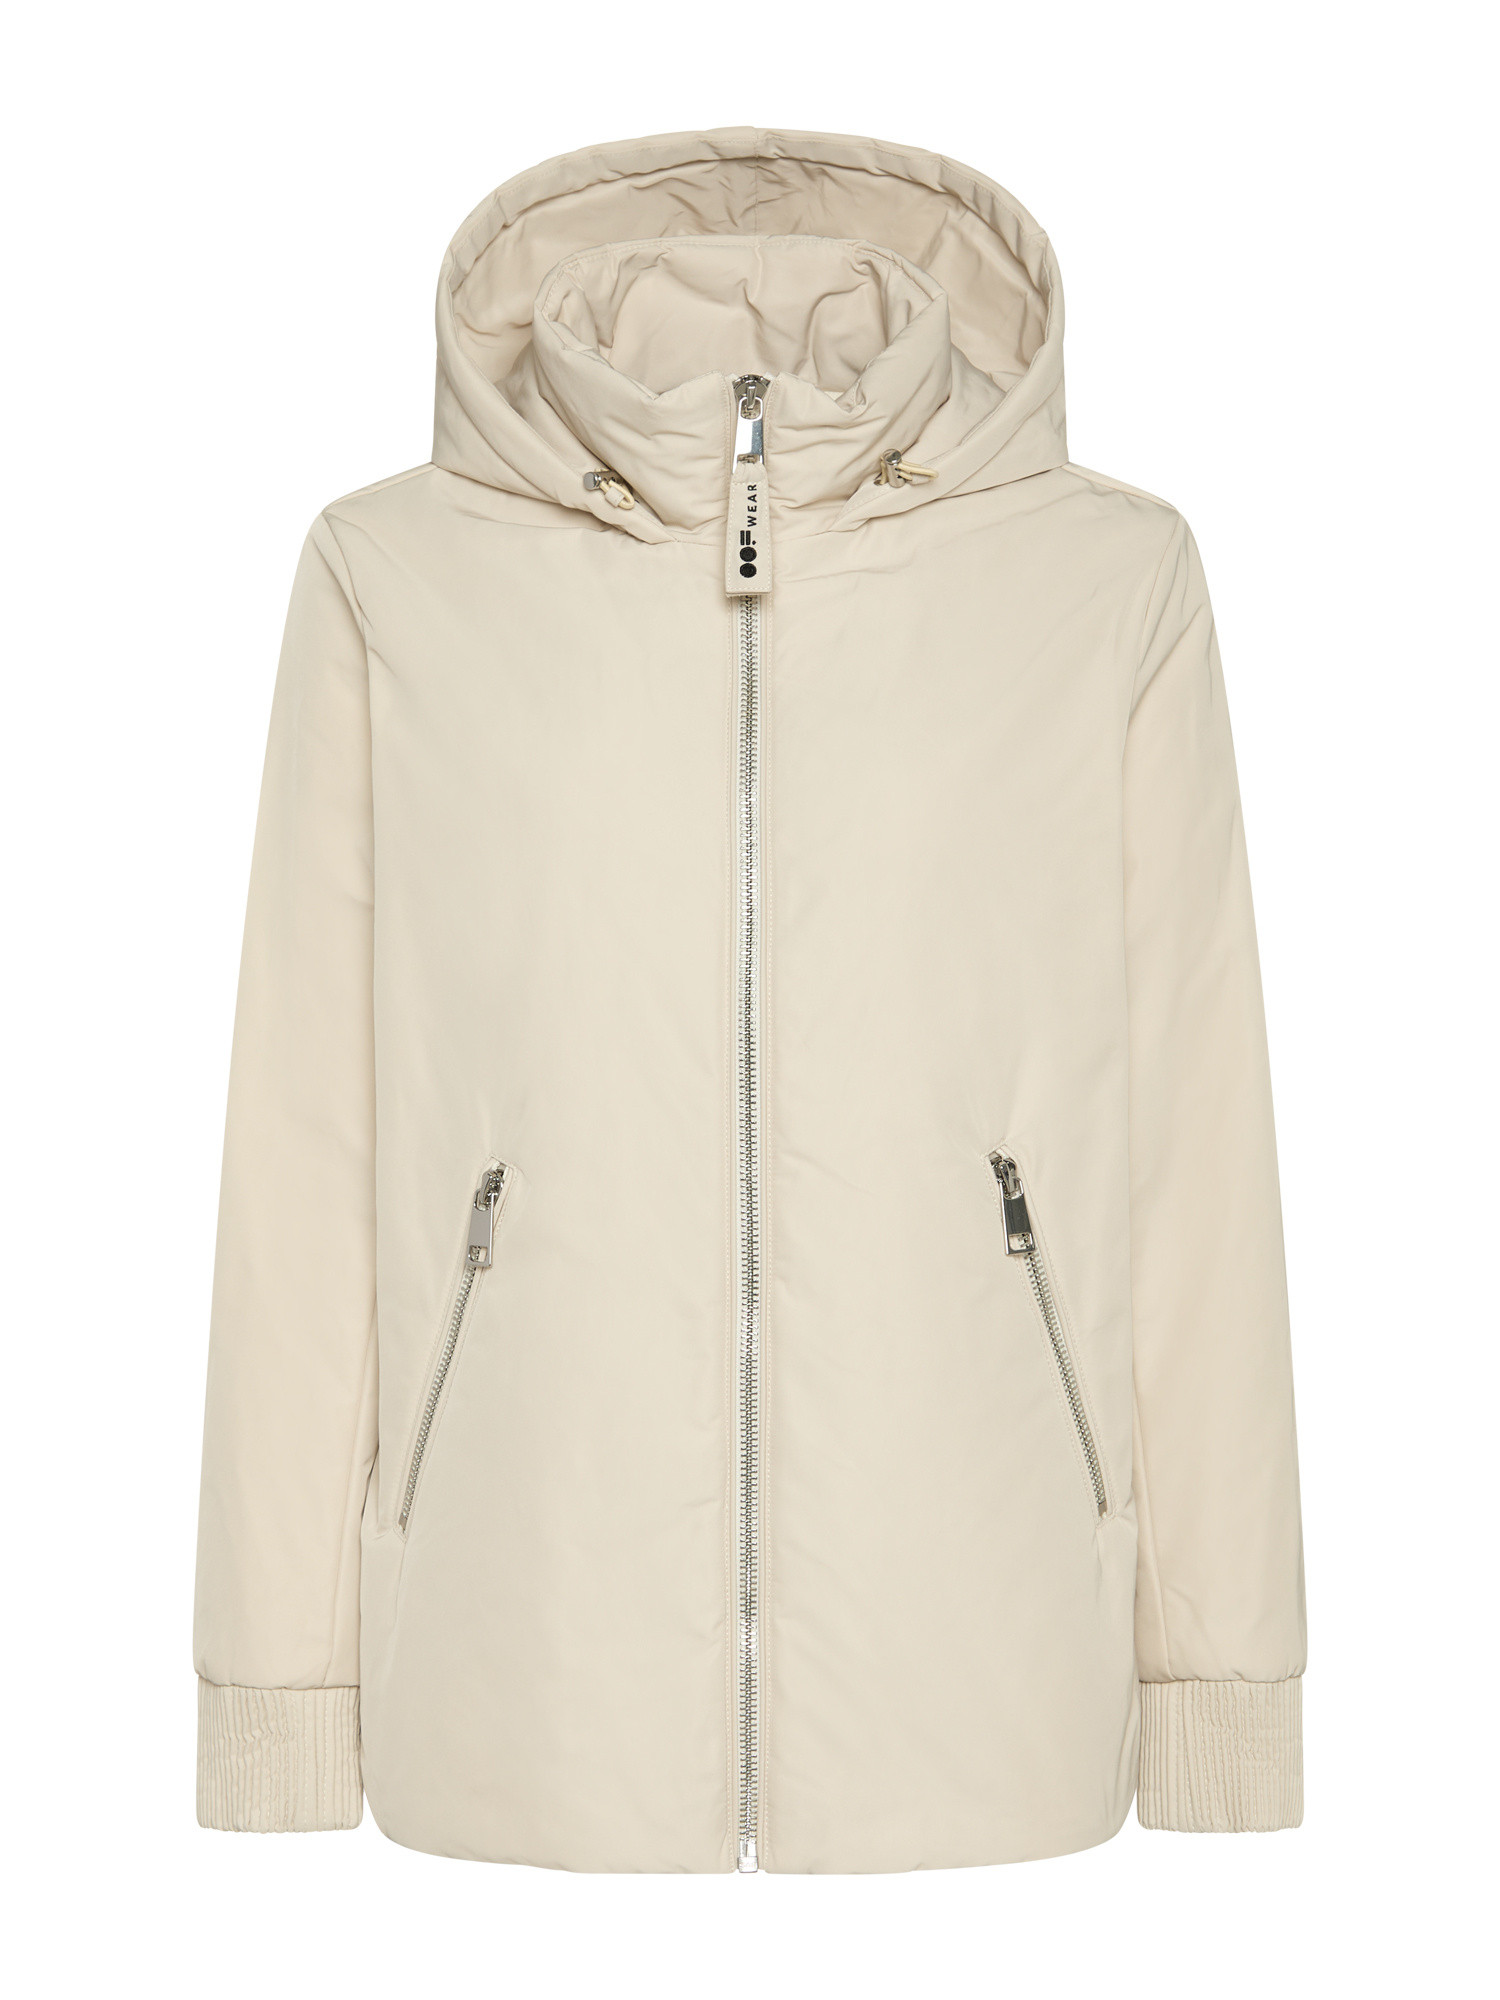 Oof Wear - Short hooded jacket, White Cream, large image number 0